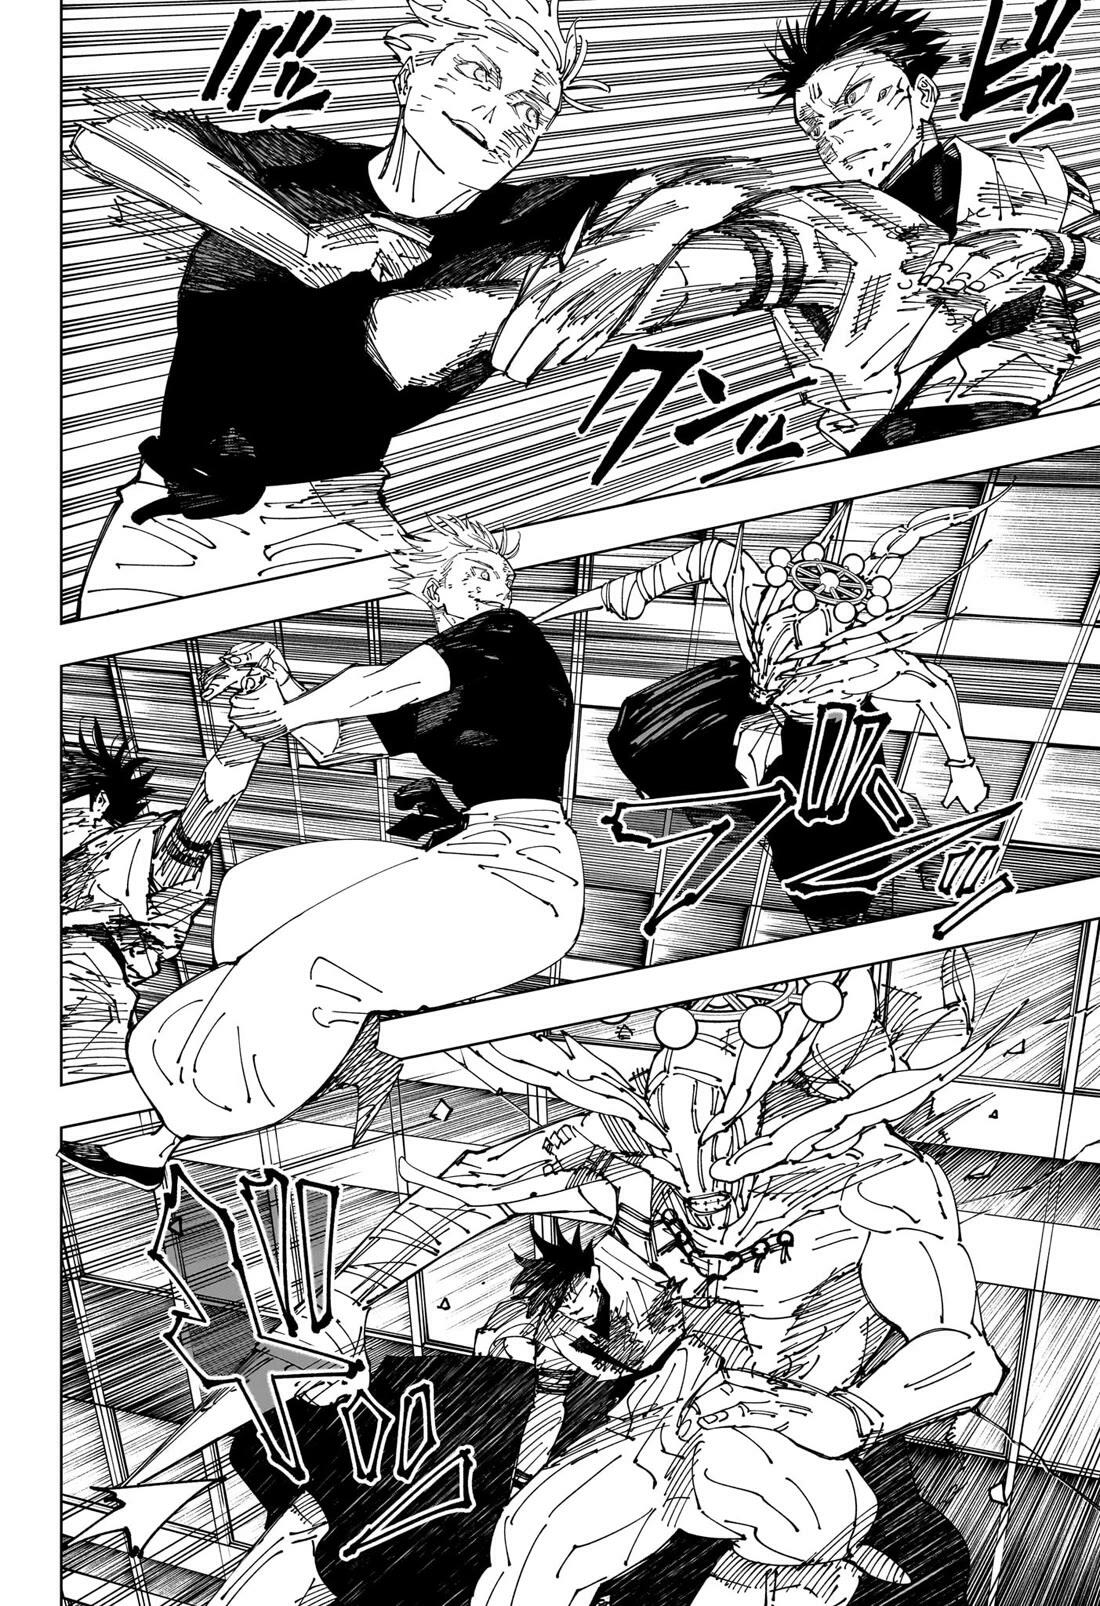 Jujutsu Kaisen Chapter 235: The Decisive Battle In The Uninhabited, Demon-Infested Shinjuku ⑬ page 5 - Mangakakalot